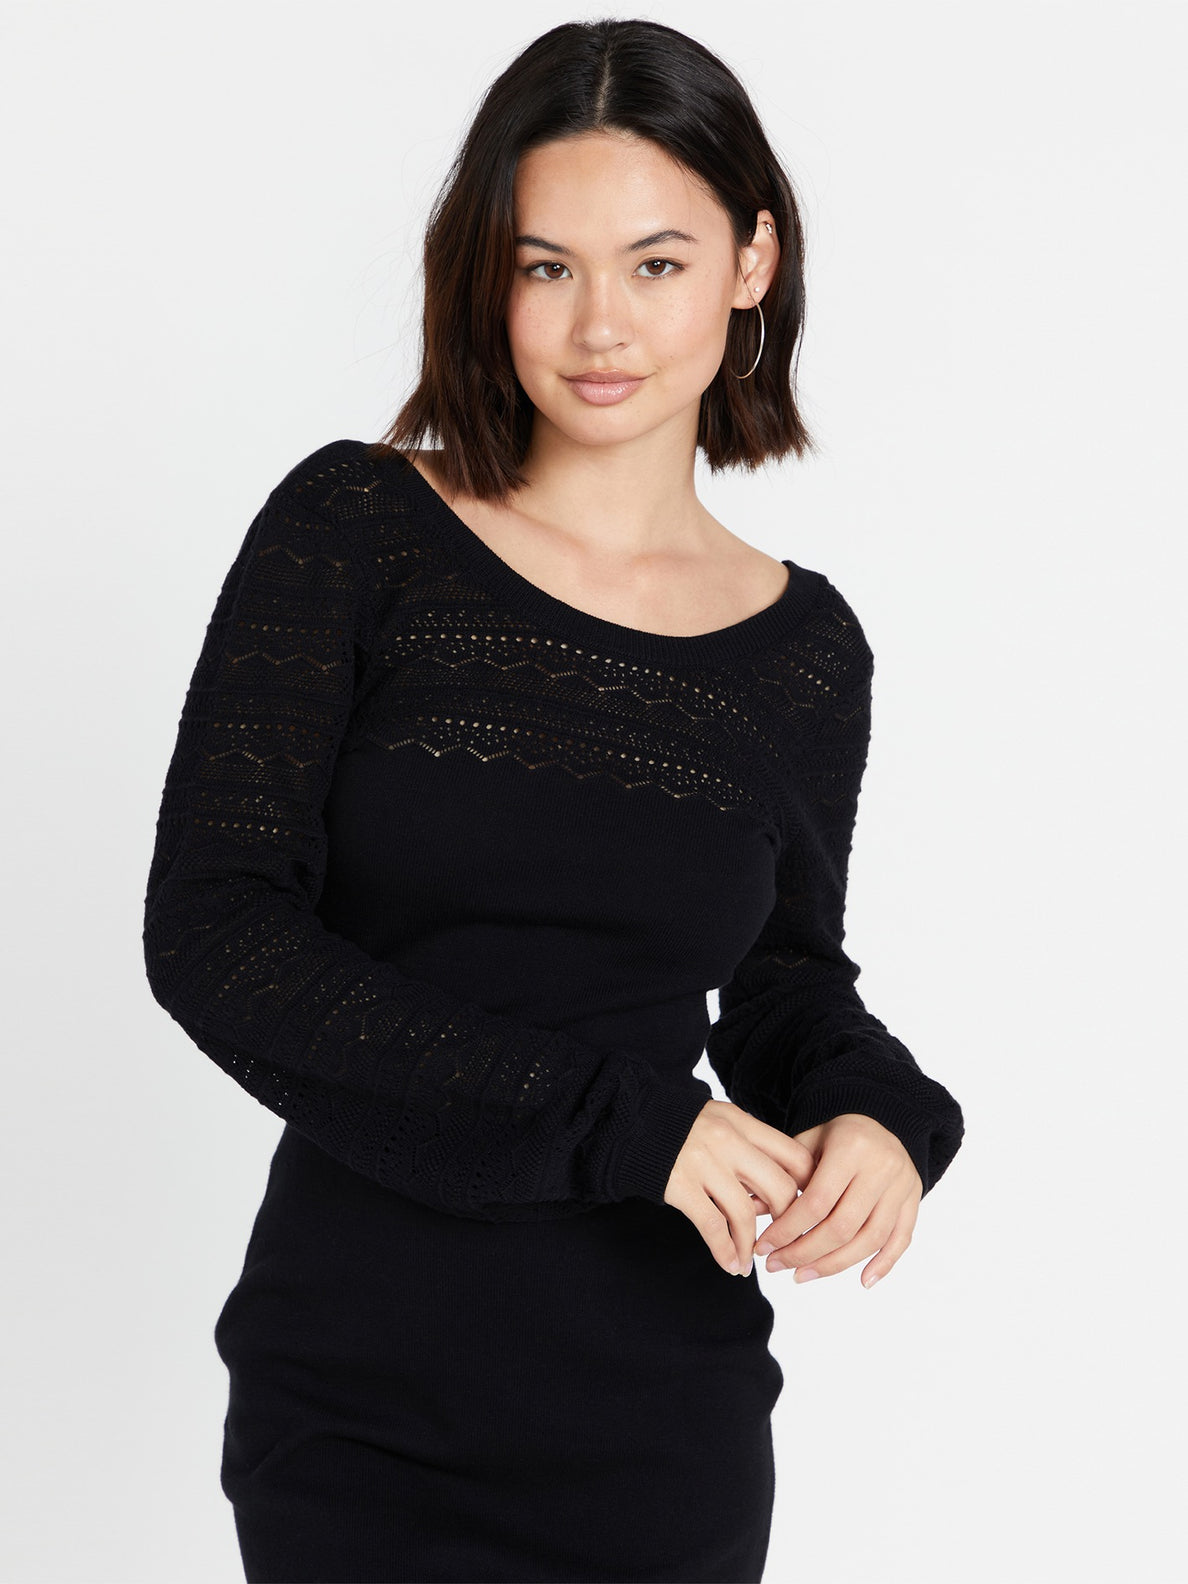 Cozy Babe Sweater Dress - Black